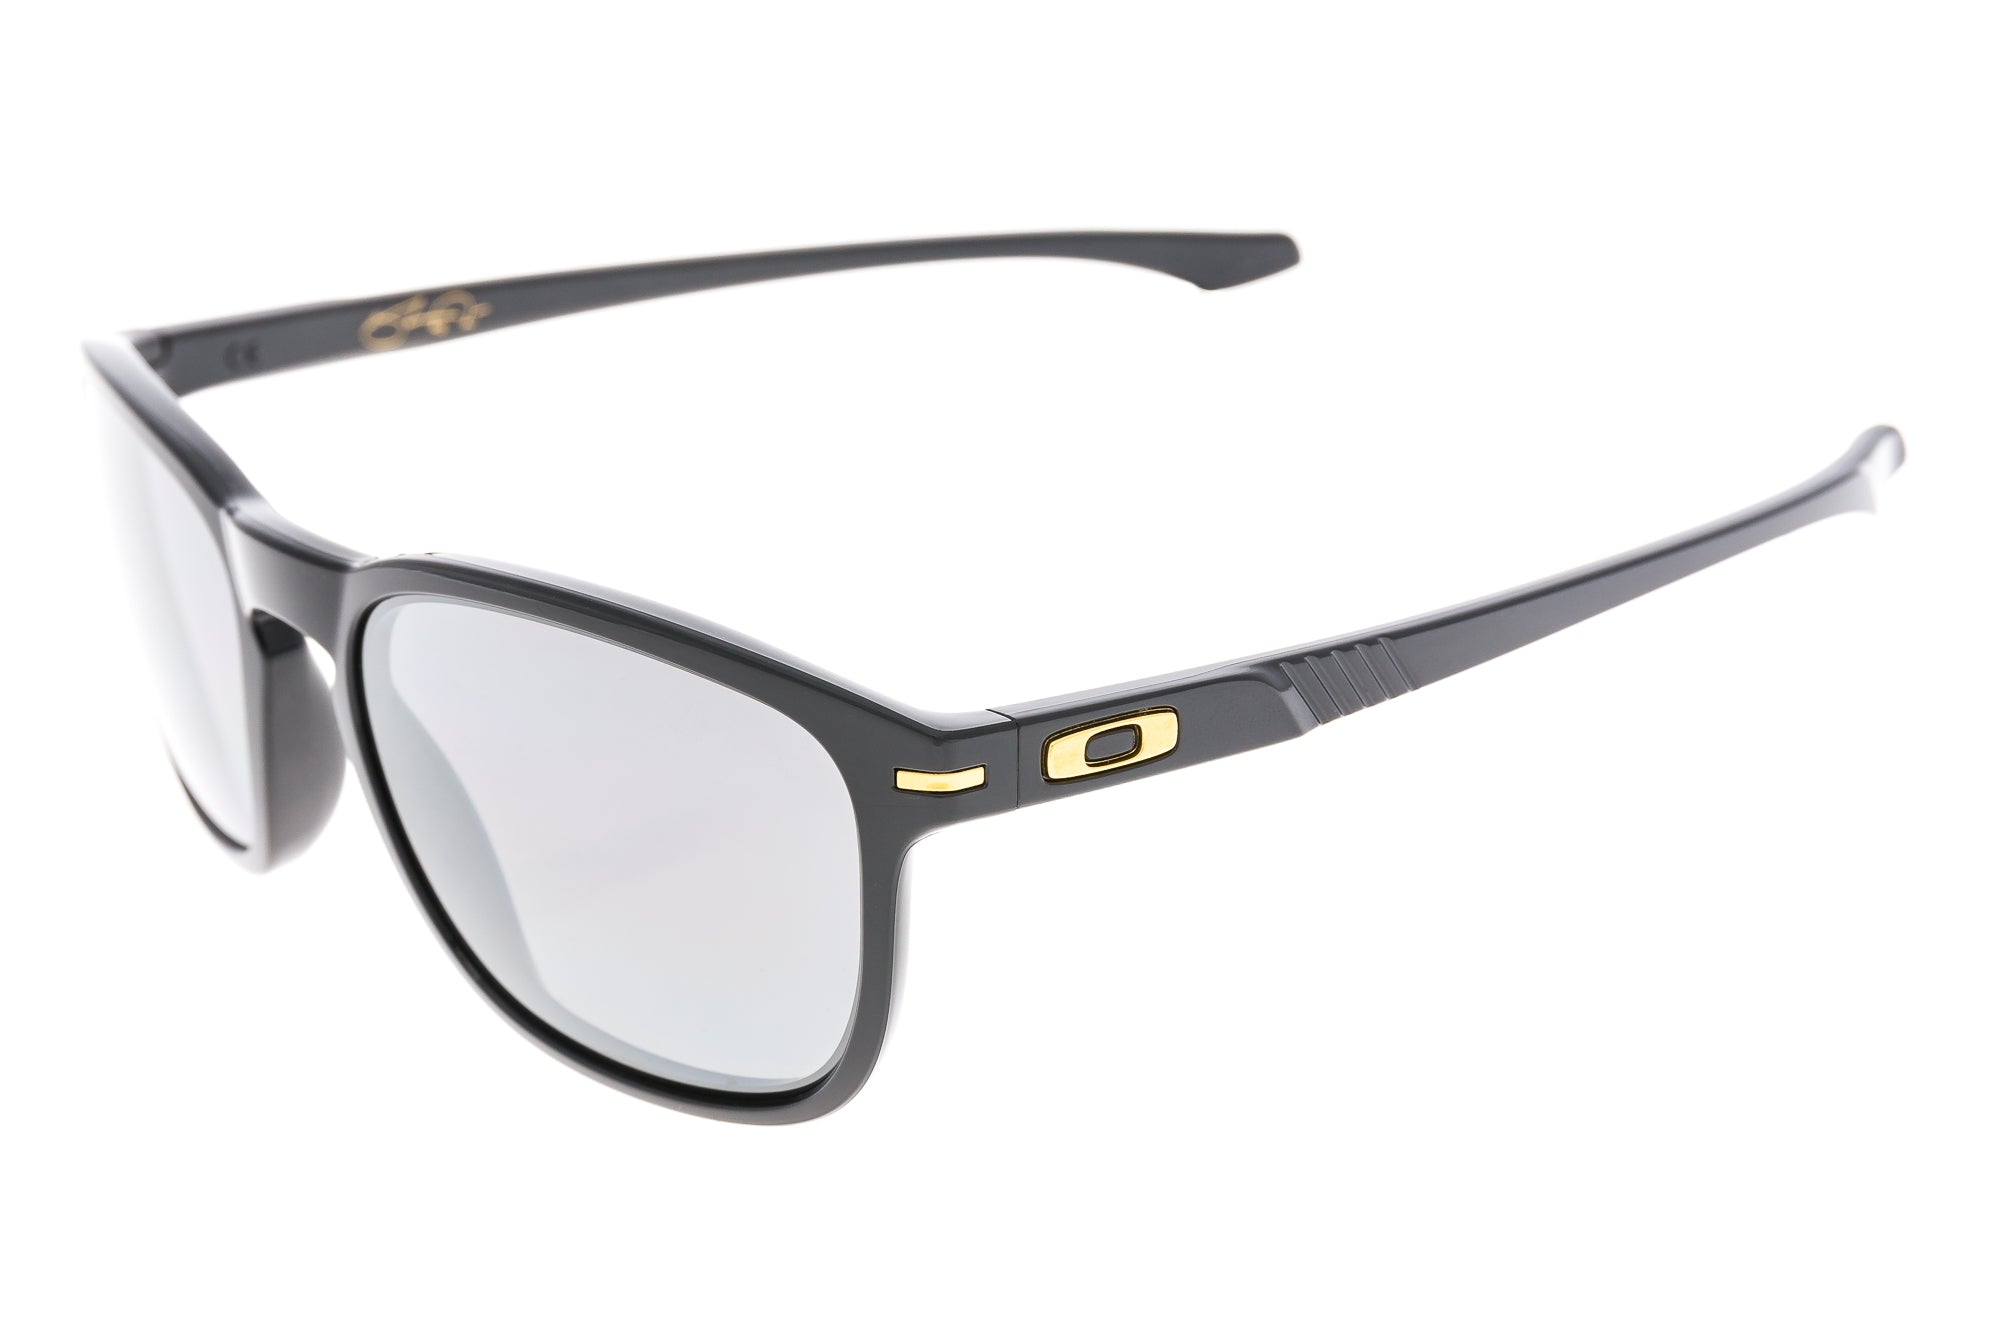 Oakley Shaun White Enduro Sunglasses Black/Gold Frame Black Iridium Lens drive side